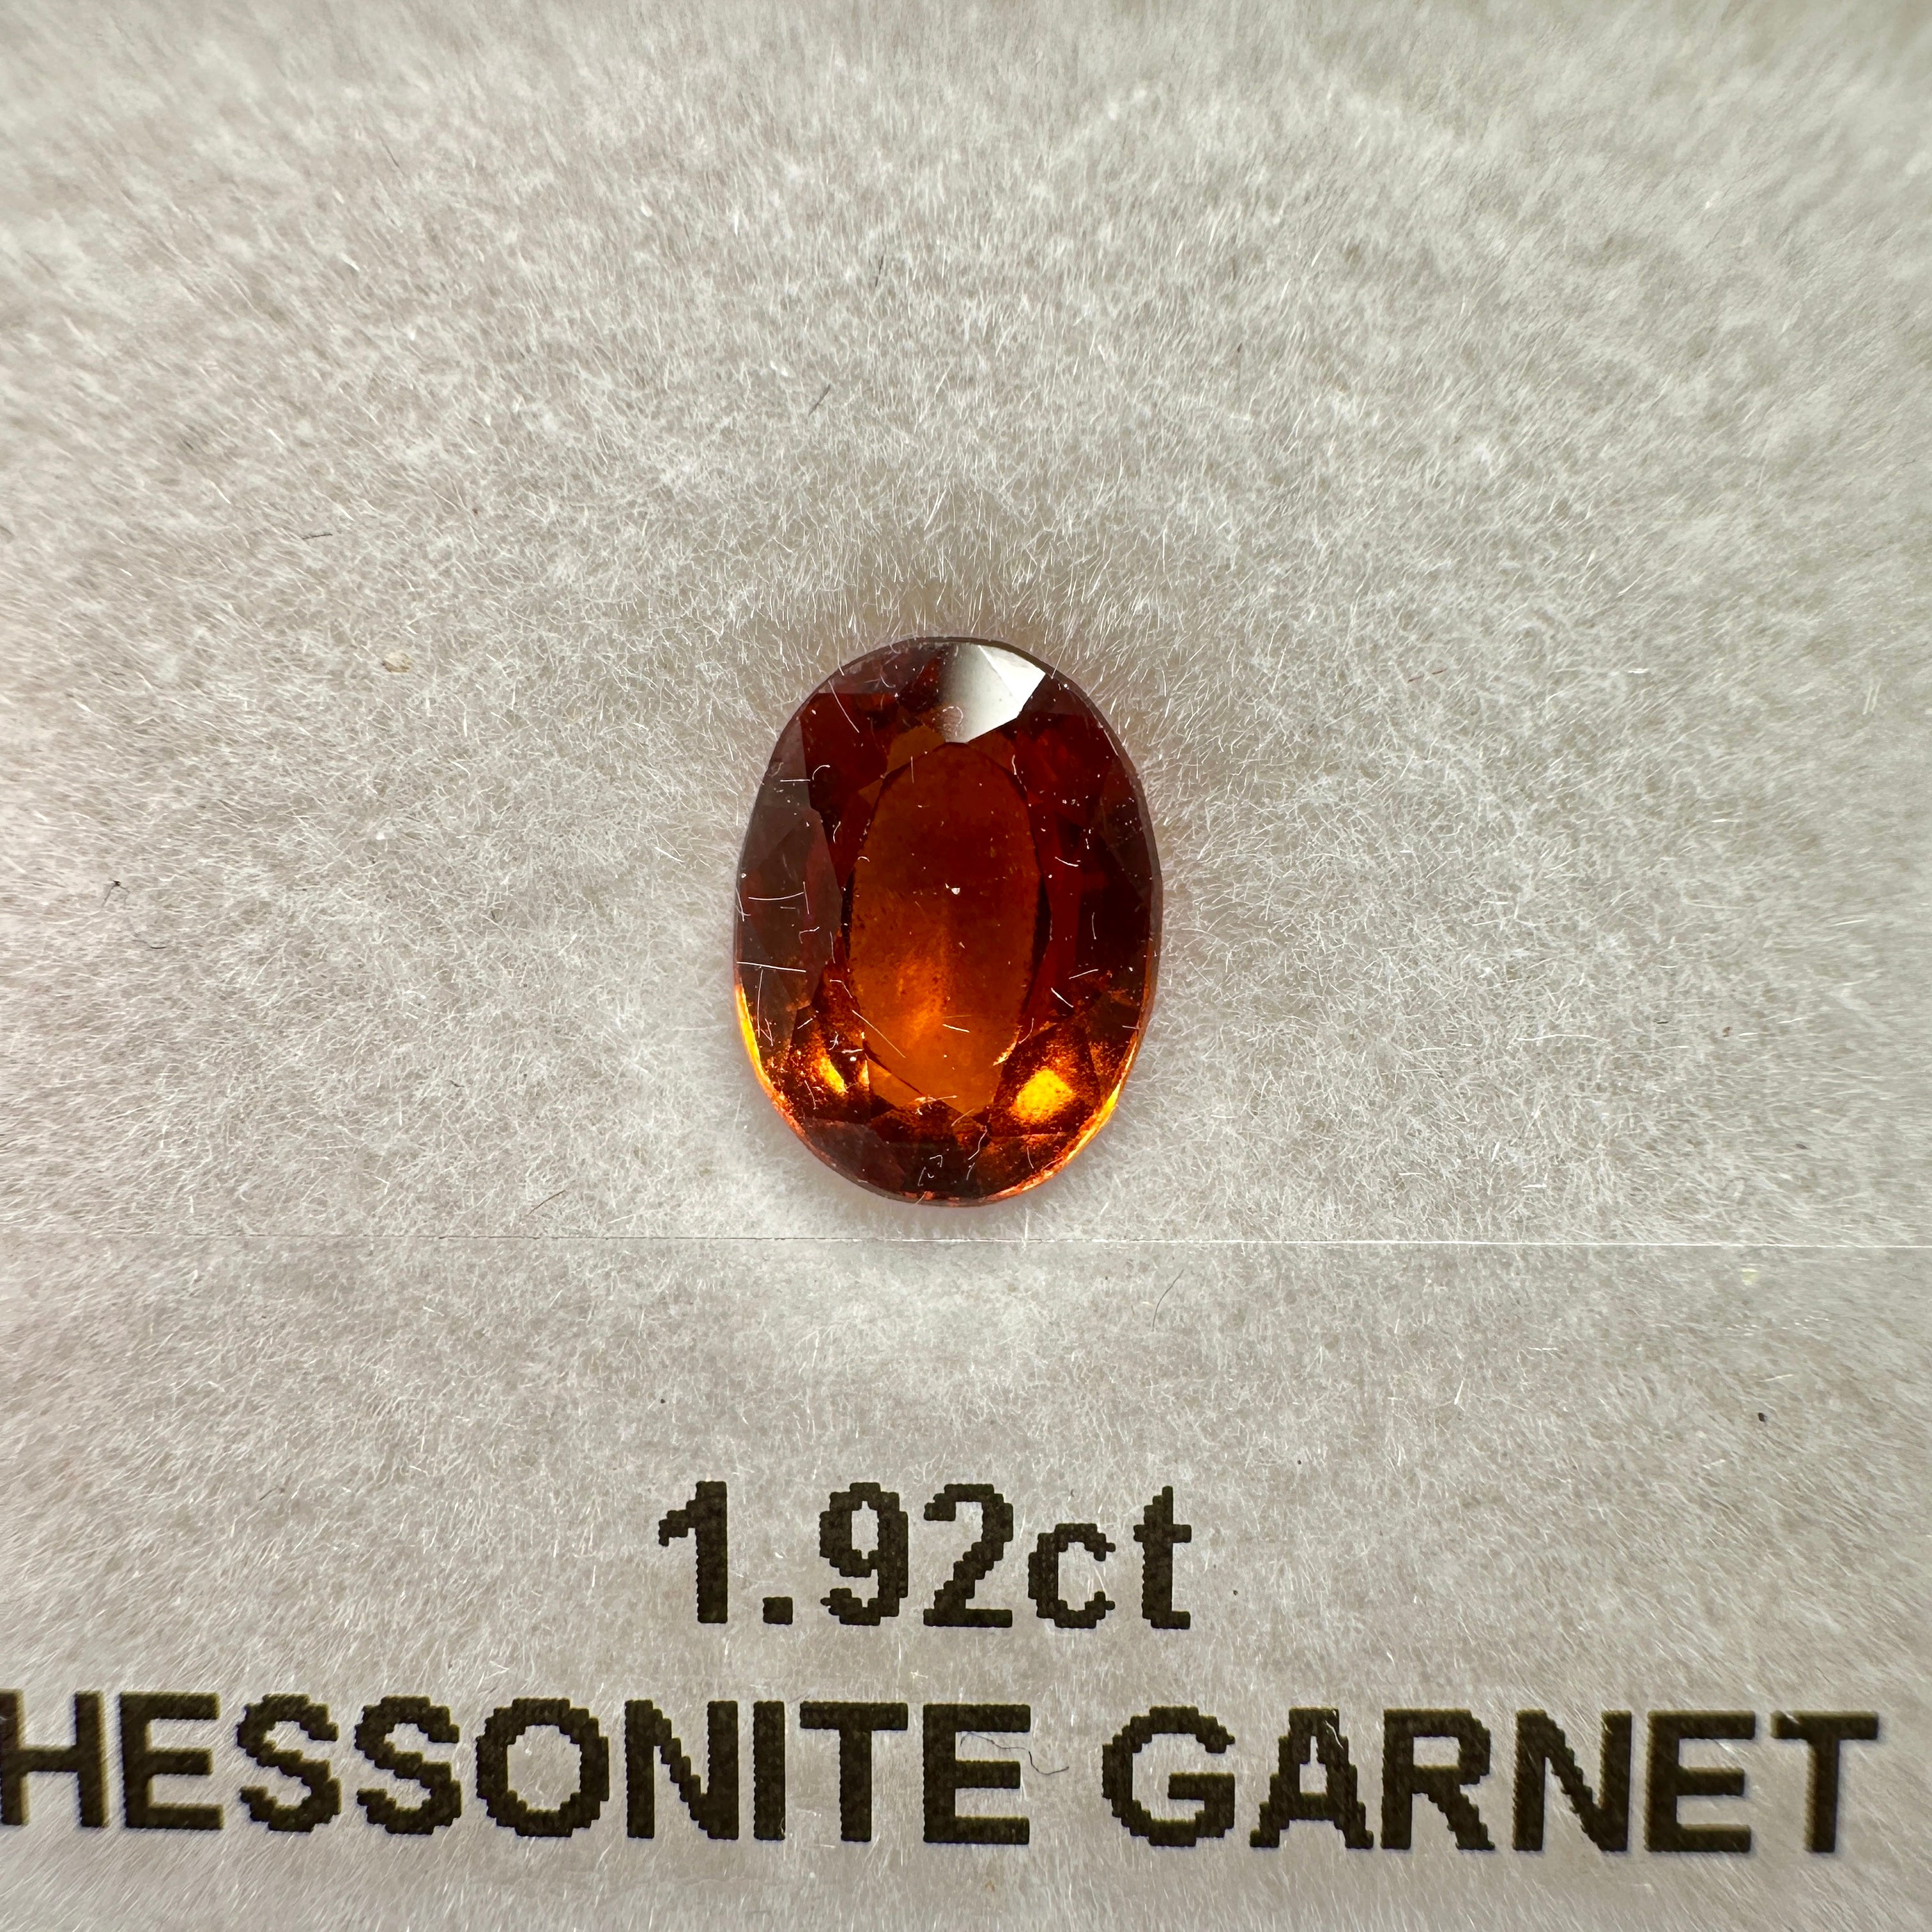 1.92ct Hessonite Garnet, Untreated Unheated, native cut